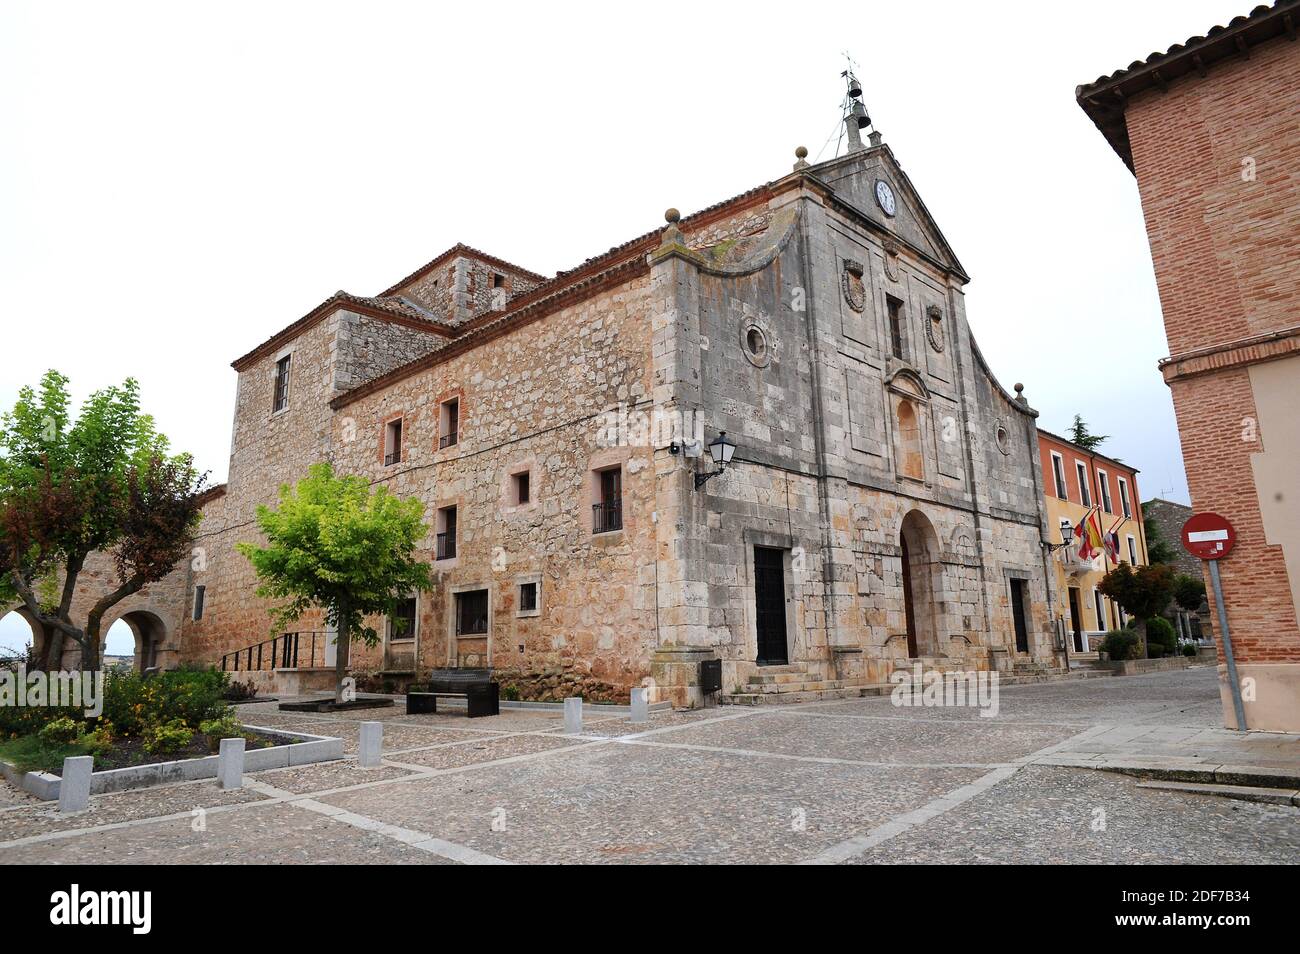 Convento de santa clara hi-res stock photography and images - Alamy